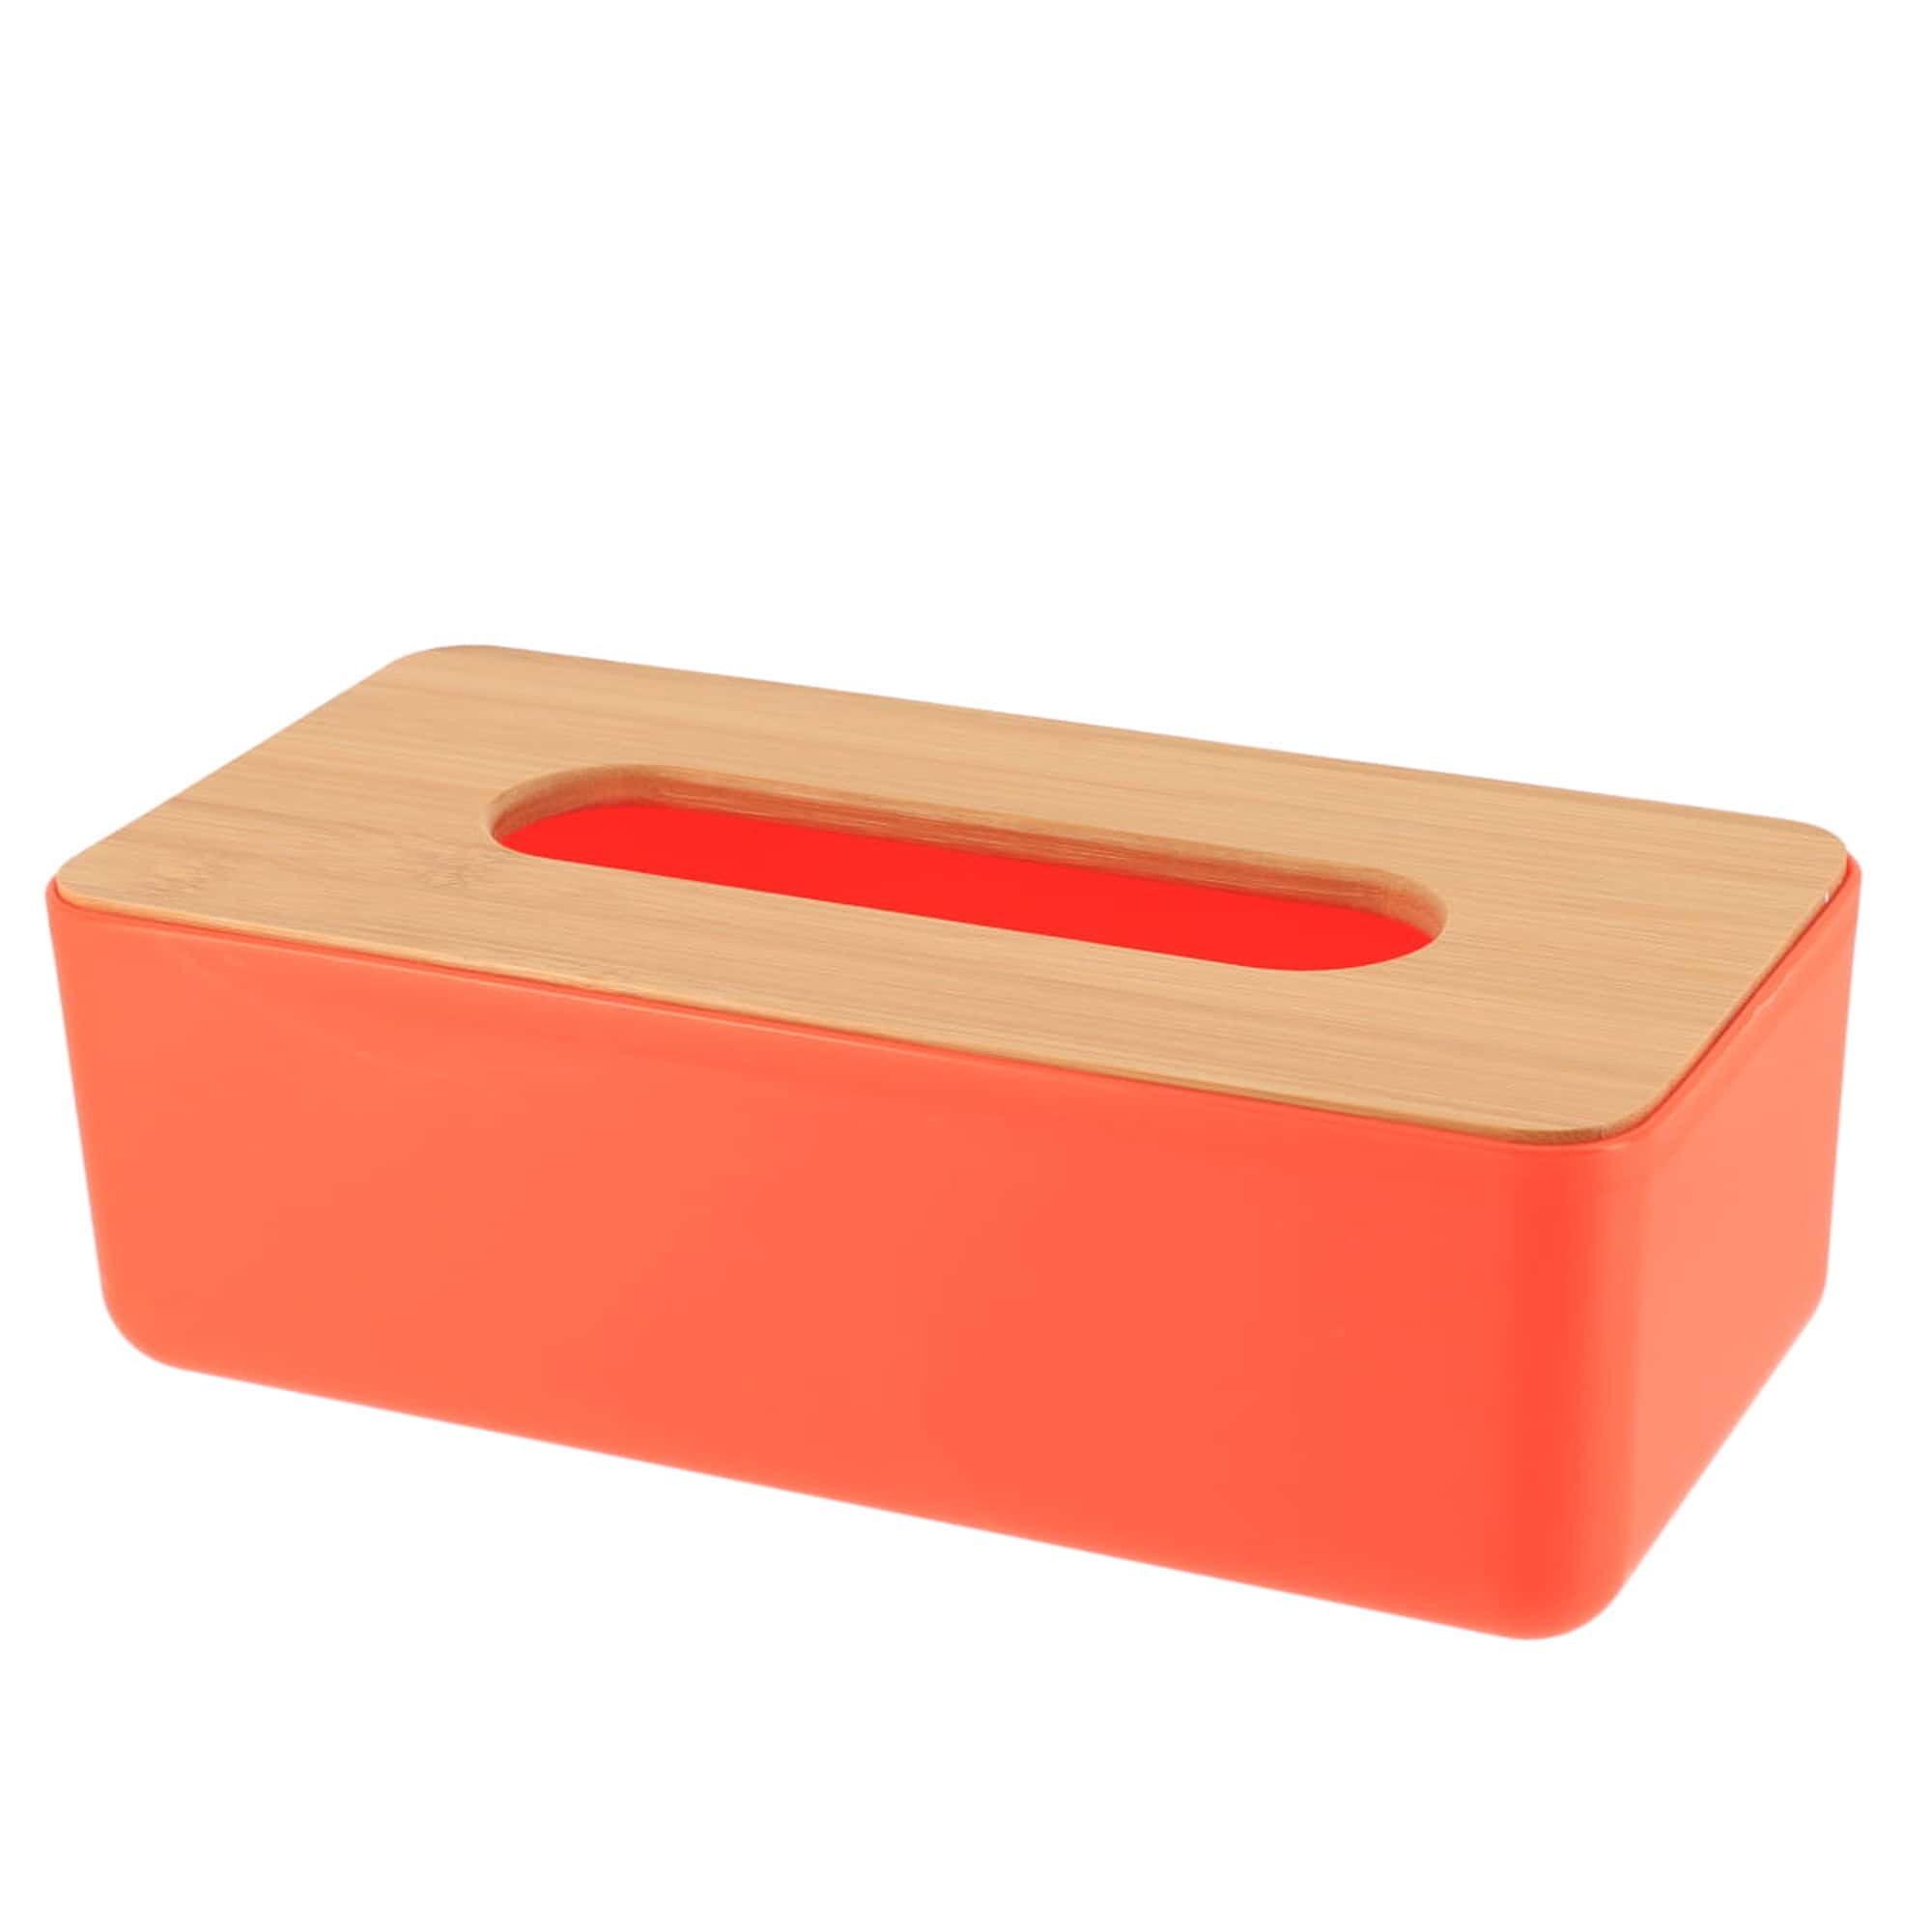 orange and bamboo tissue box cover